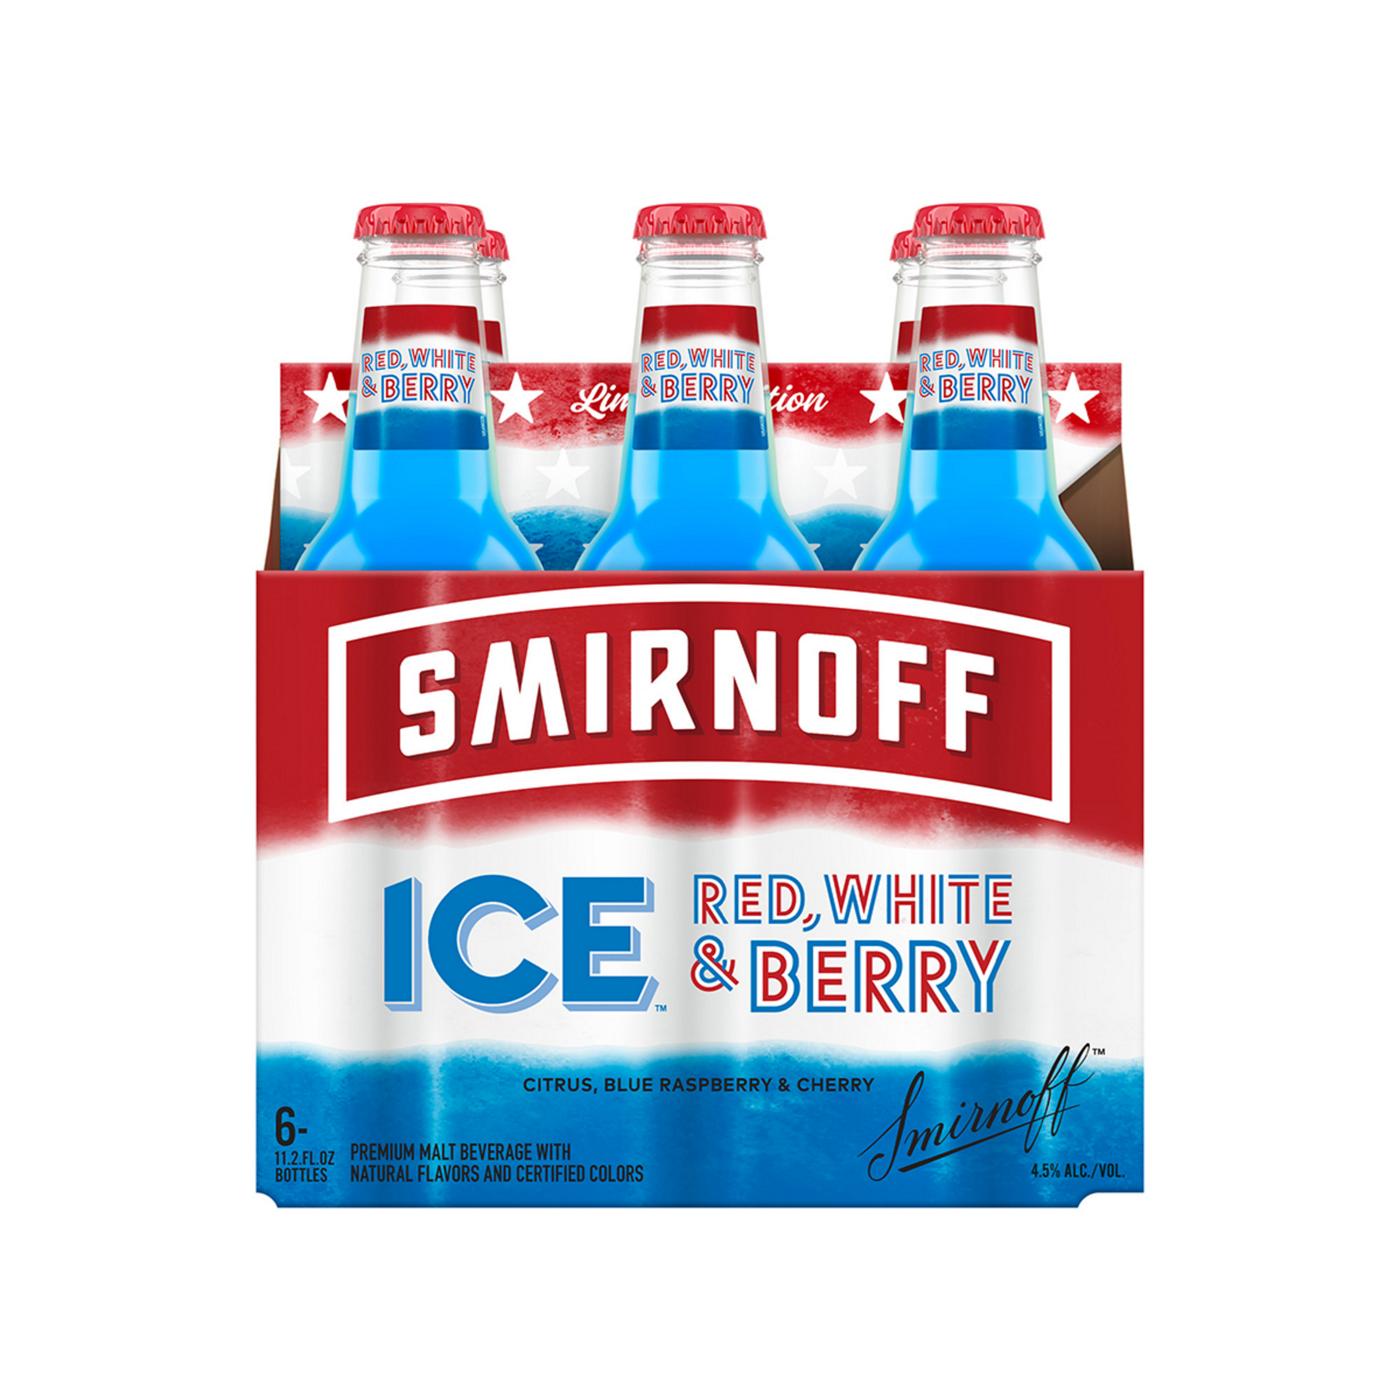 Smirnoff Ice Red, White, Berry; image 1 of 5